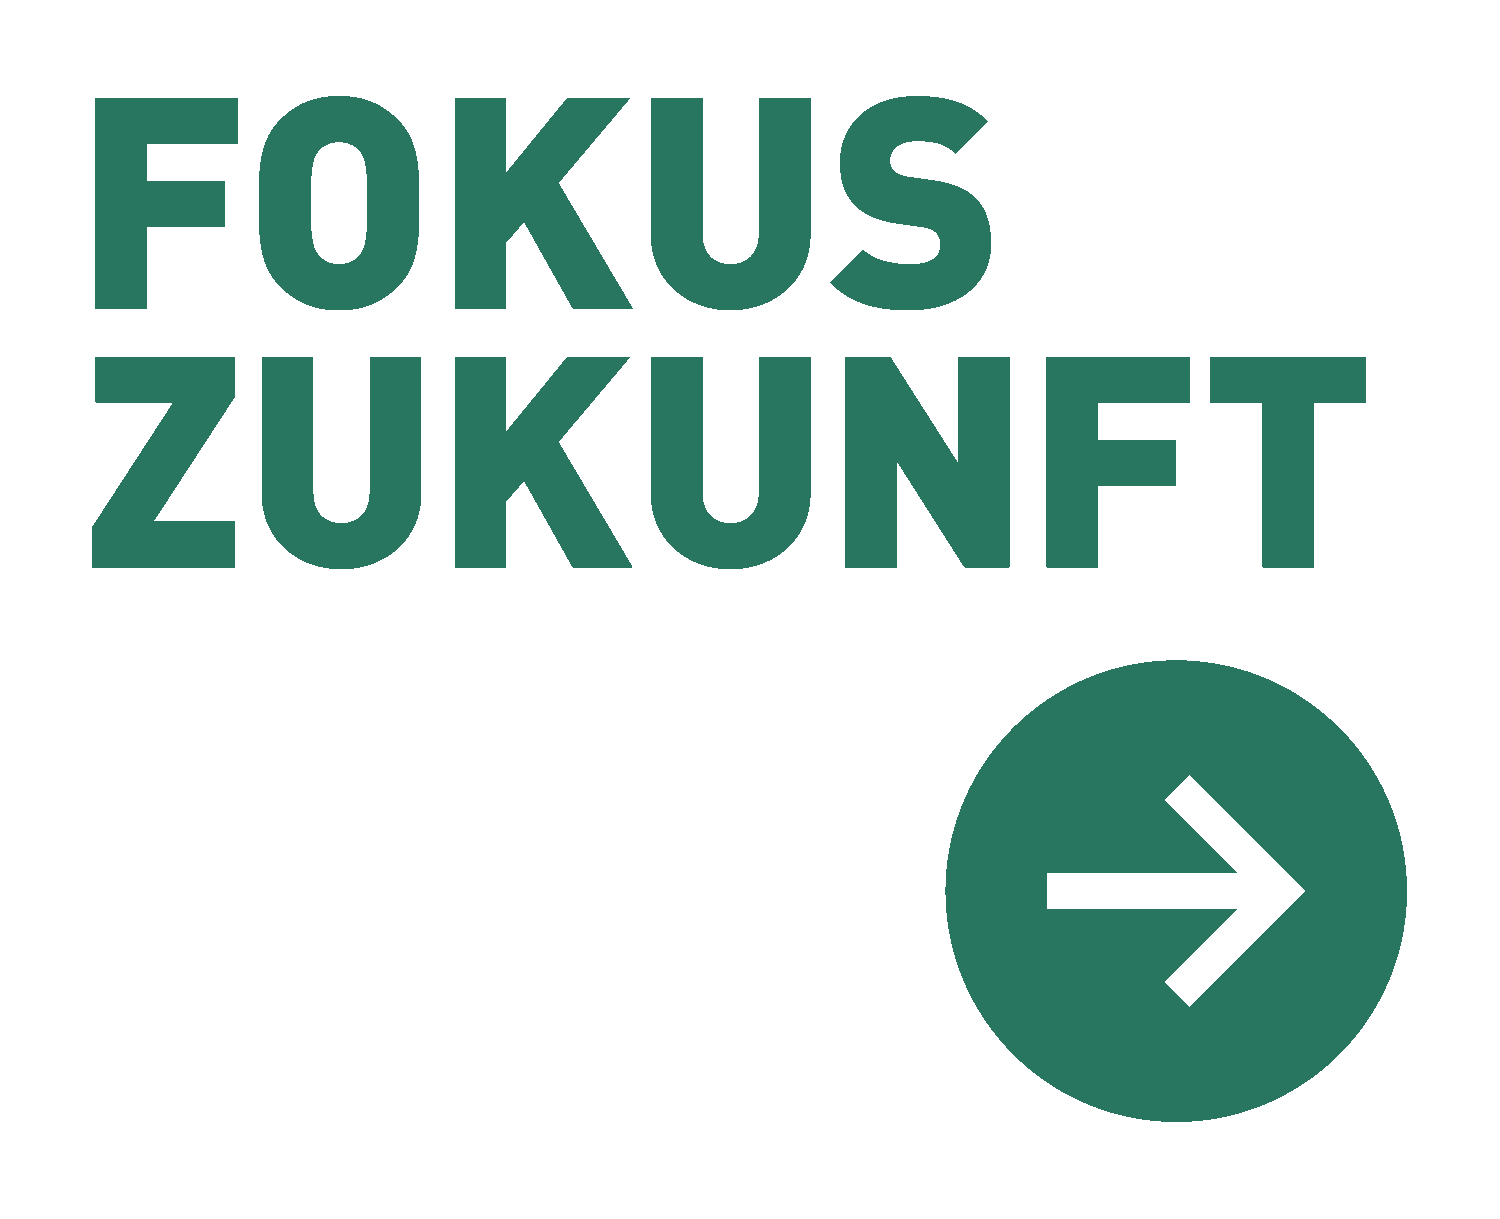 FOKUS ZUKUNFT